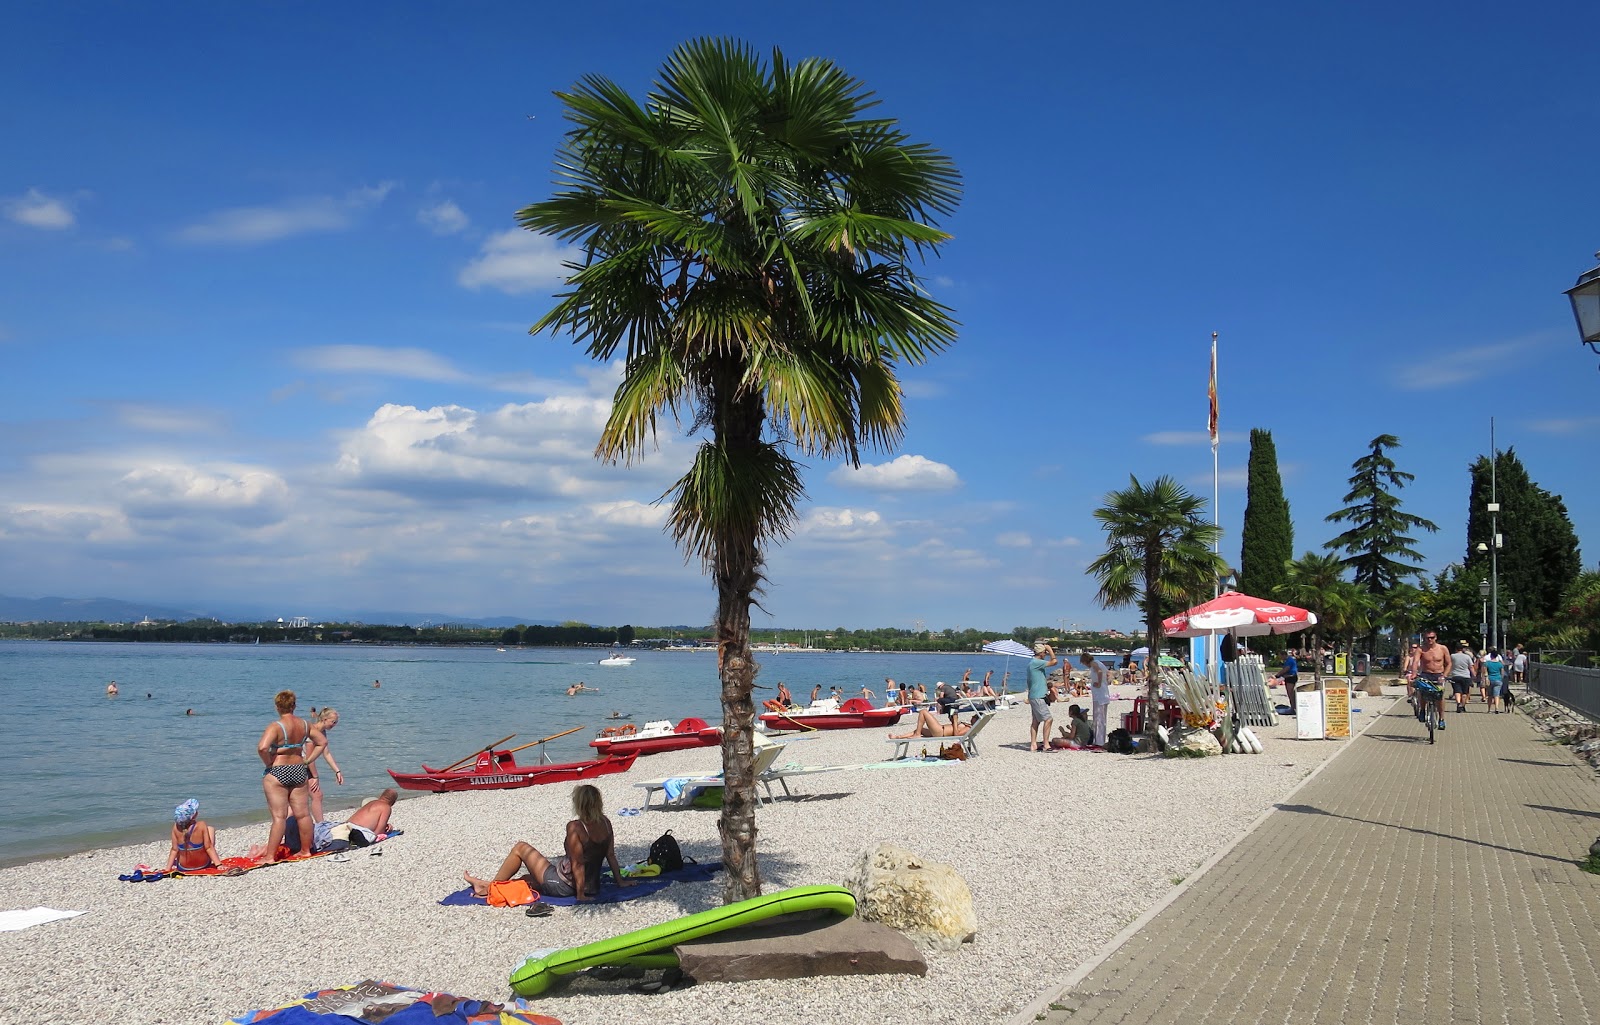 Fotografija Spiaggia Dei Capuccini z sivi fini kamenček površino